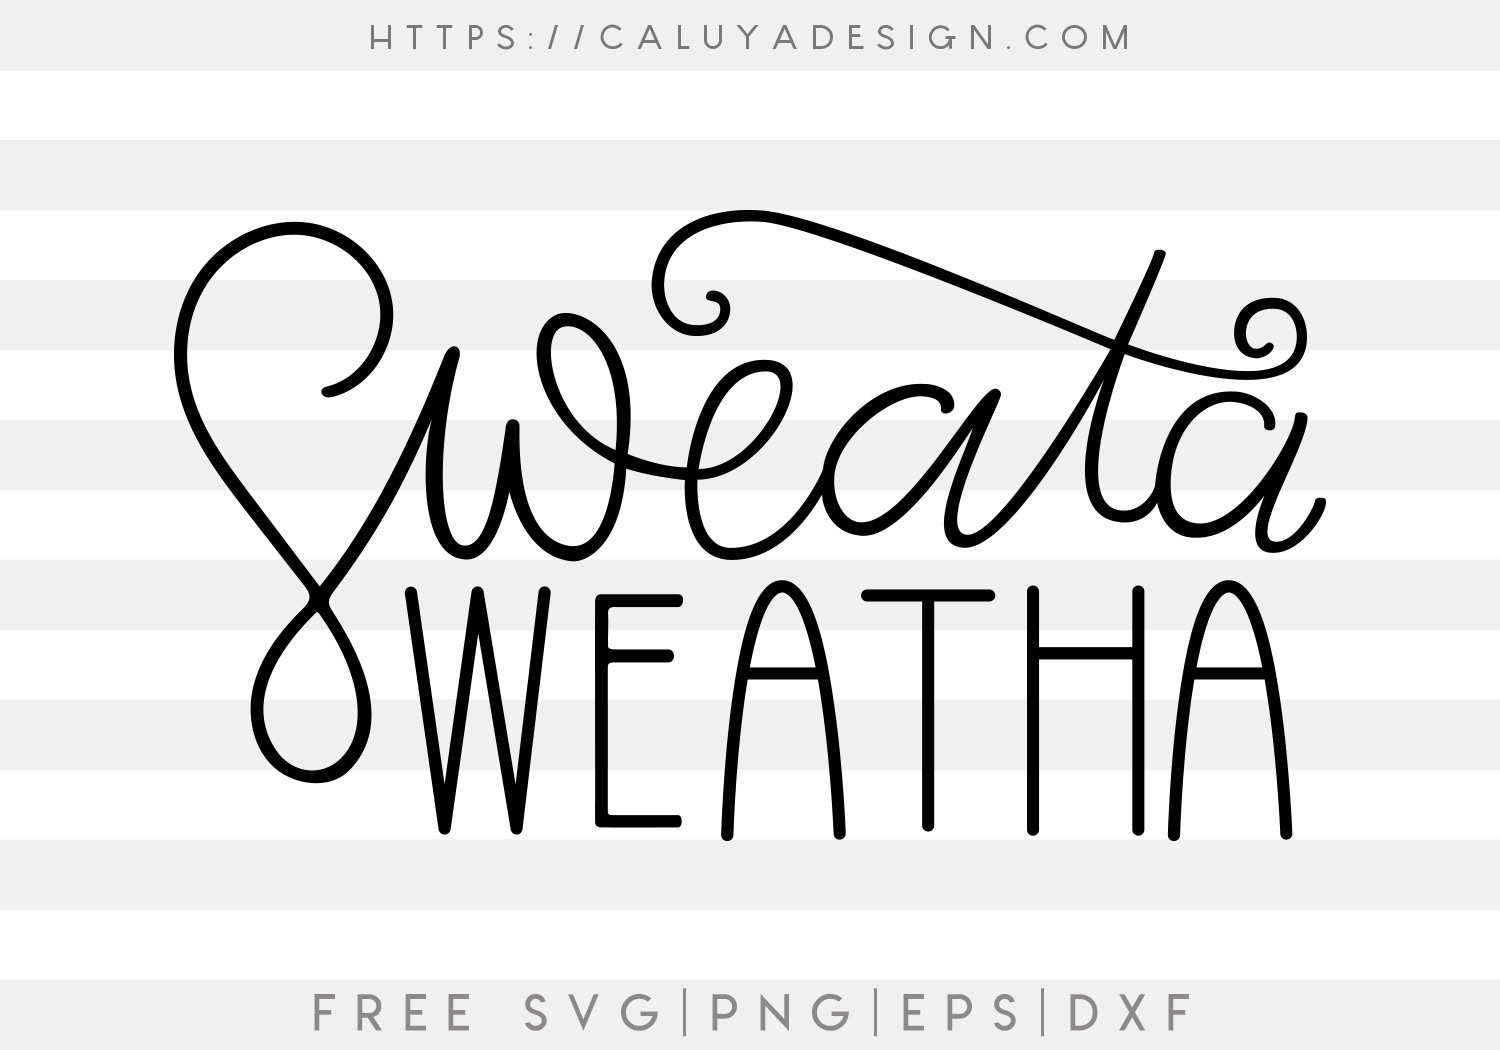 Sweata Weatha SVG, PNG, EPS & DXF